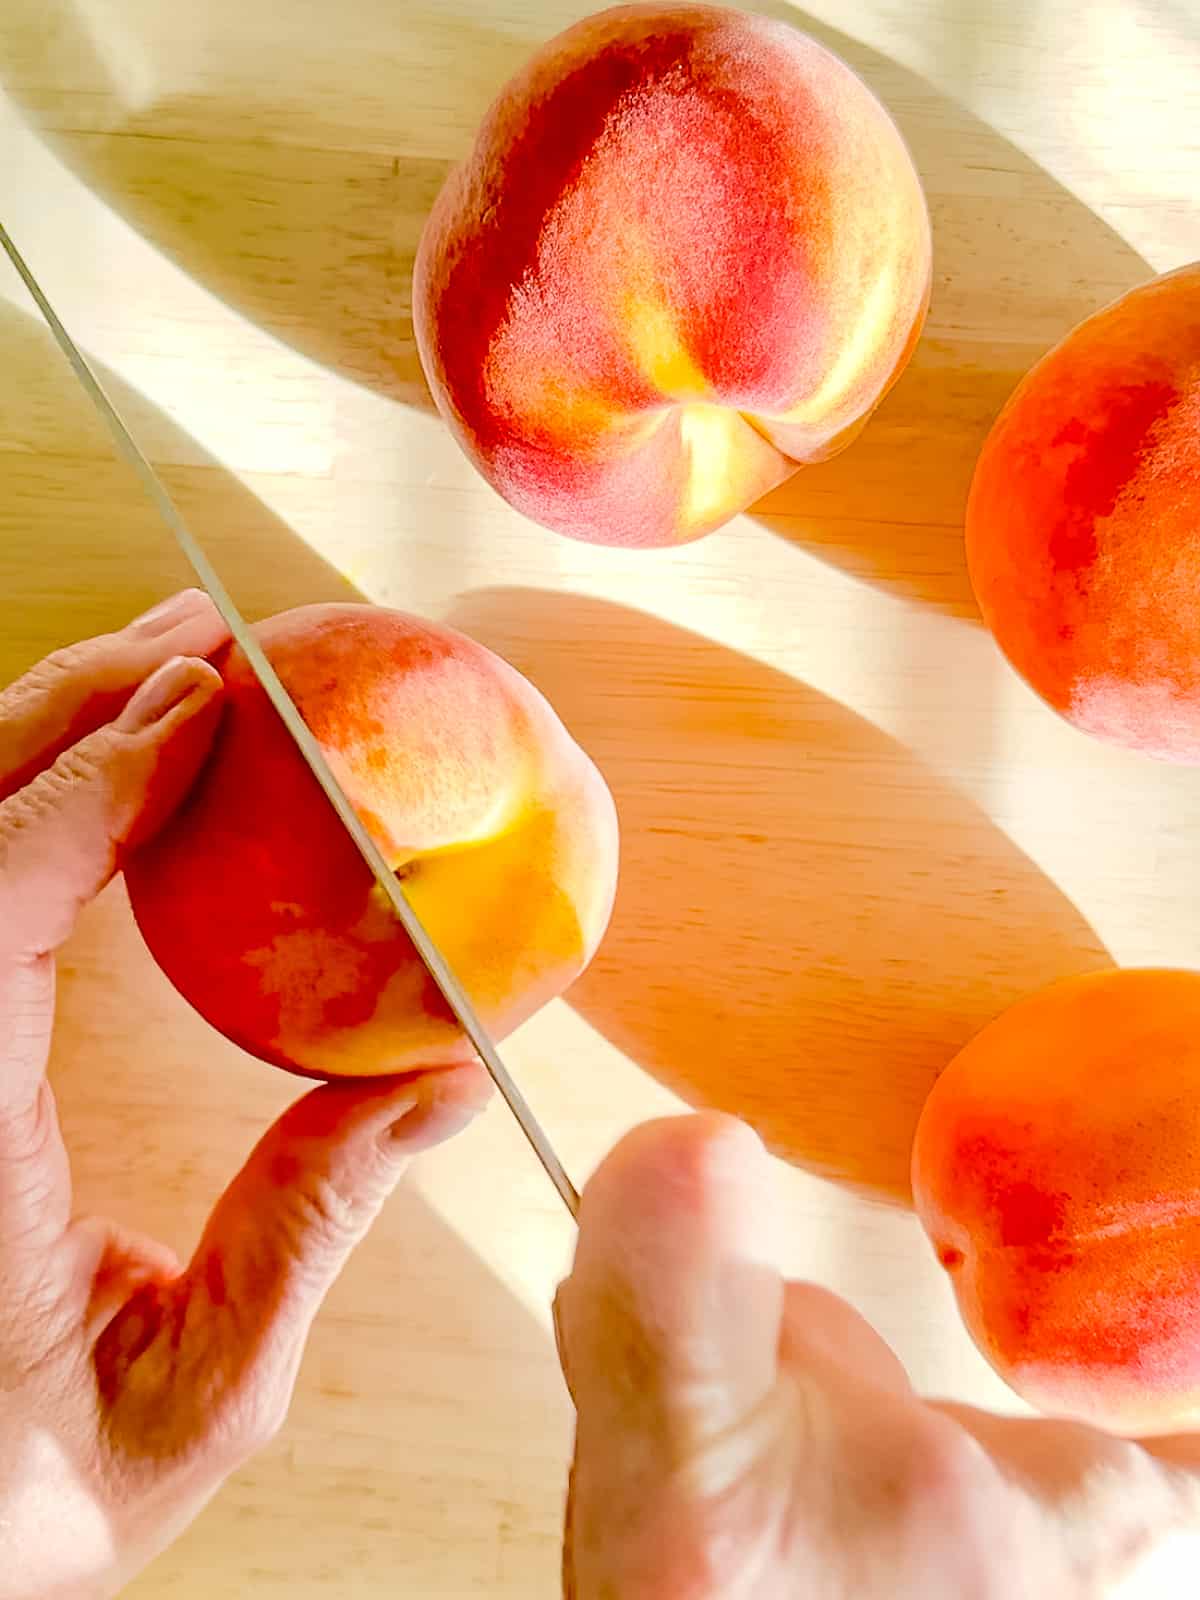 Slicing into a peach.